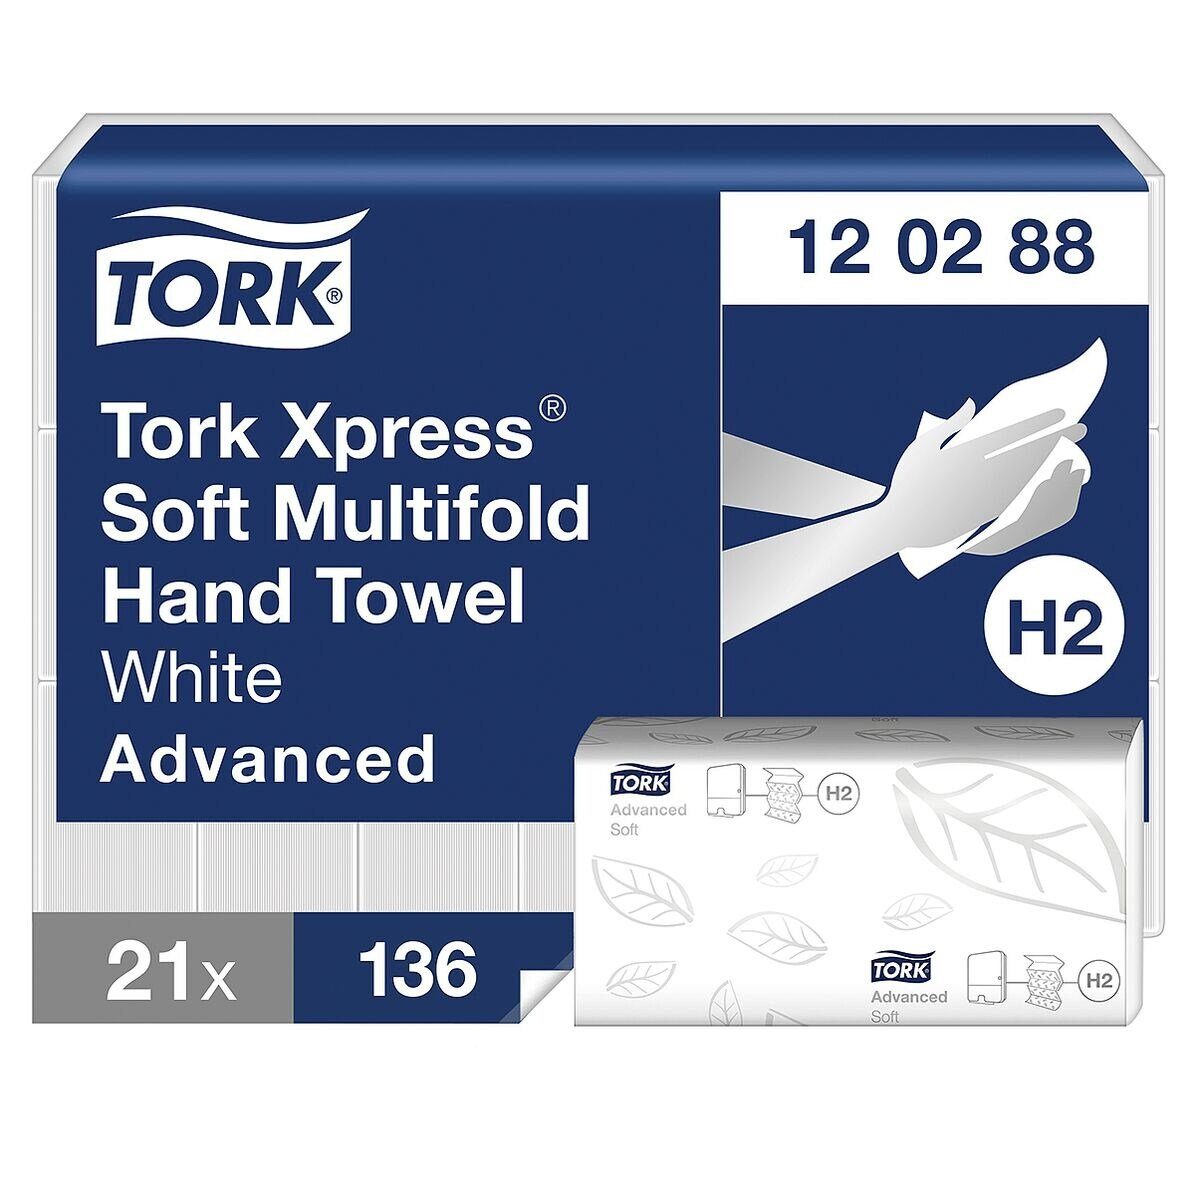 TORK Papierhandtuch Advanced, 2-lagig, TAD-Hybrid mit I-Falzung, 21x34 cm, 2856 Blatt